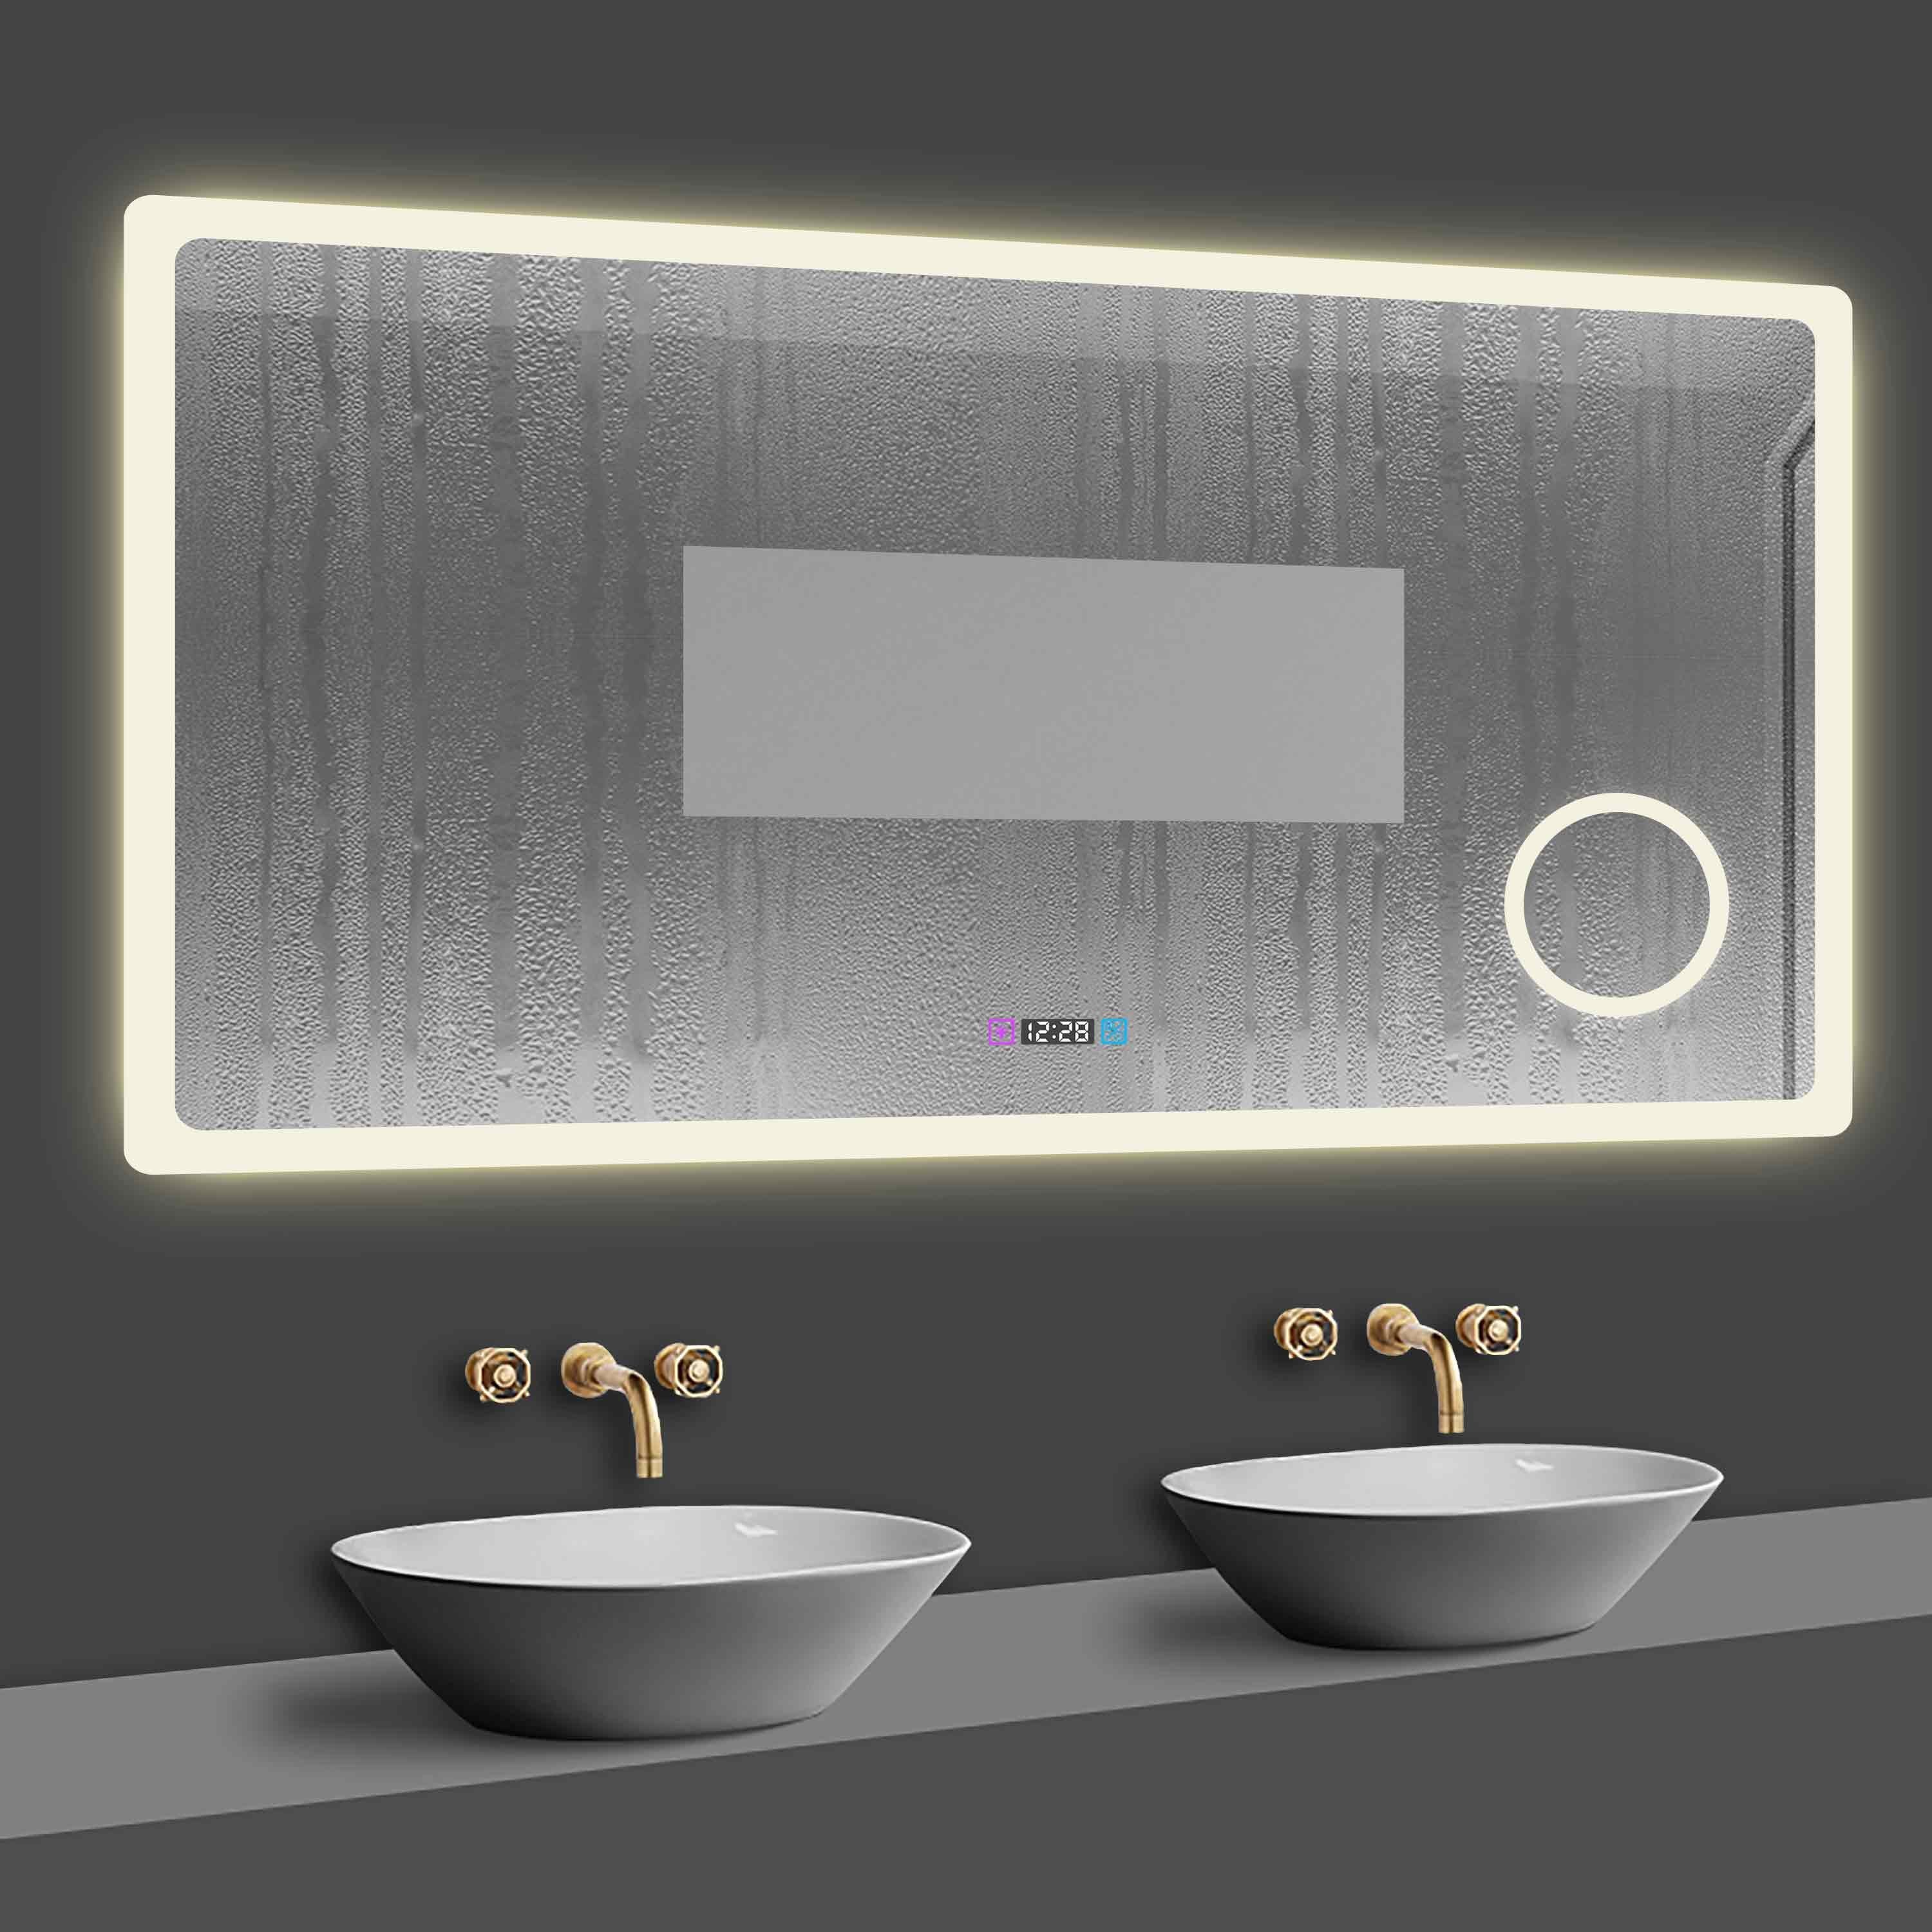 Beschlagfrei, Badspiegel 3 dimmbar Schminkspiegel, duschspa 3-Fach Lichtfarbe, Uhr, 80-160cm